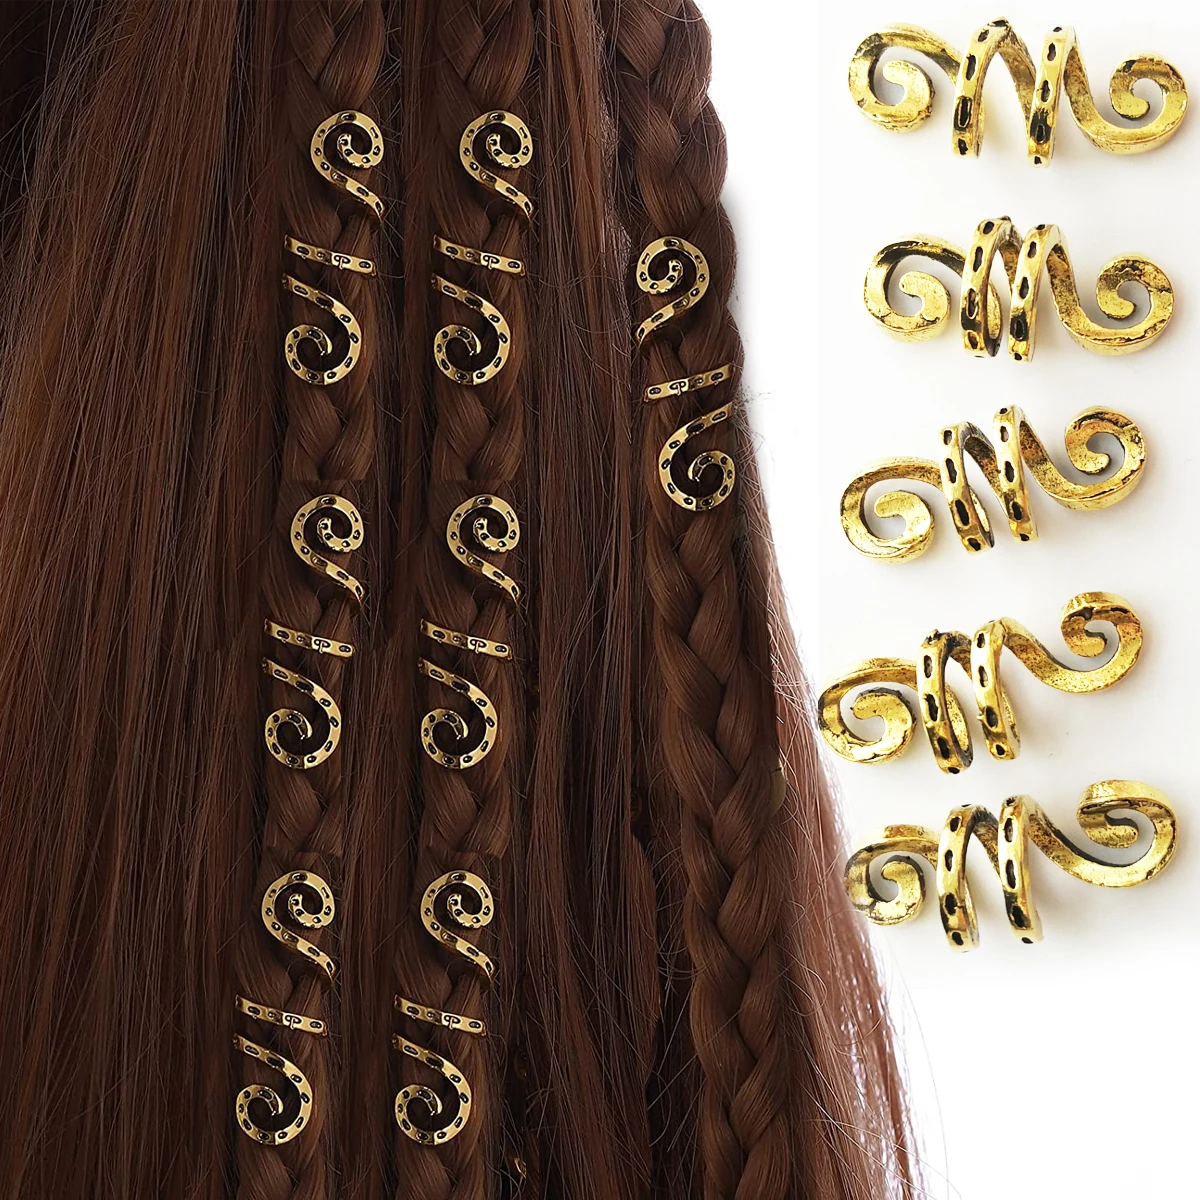 10PCS Hair Rings Accessories Viking Spiral Metal Charms Hair Braid Beard Dreadlock Beads For Women Men Clips Tube Jewelry